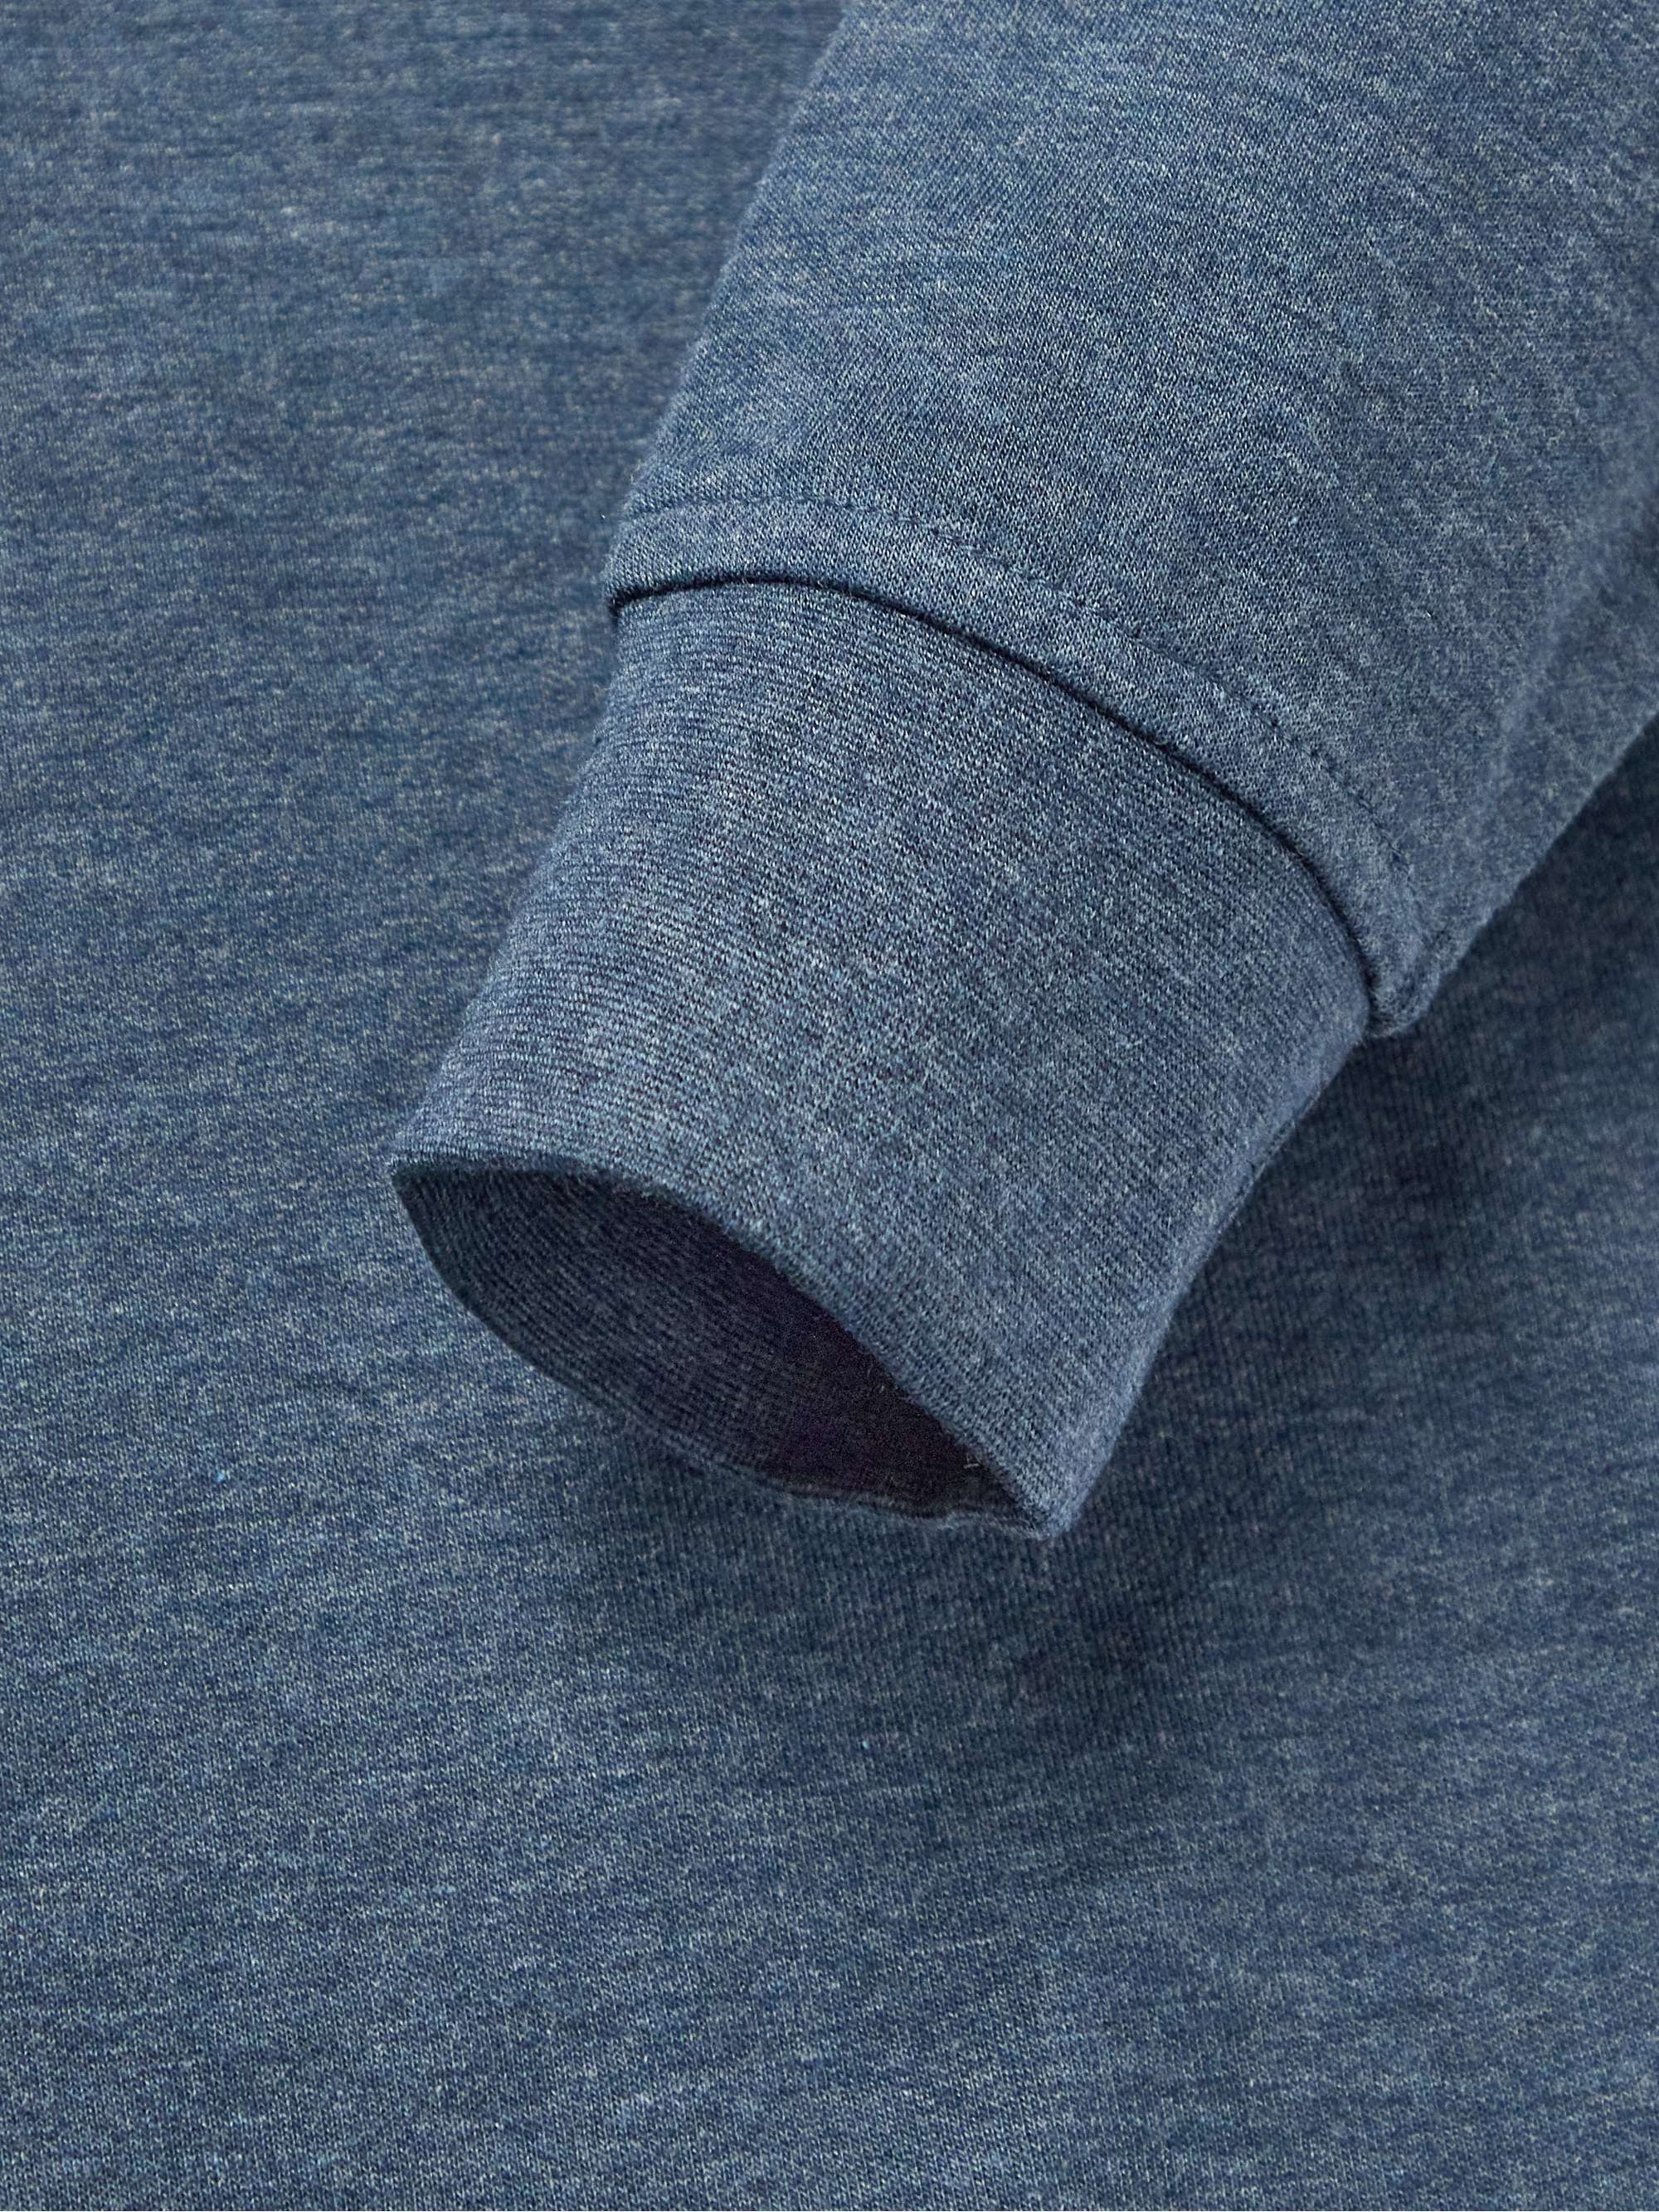 PETER MILLAR Crown Mélange Stretch Cotton and Modal-Blend Half-Zip Sweatshirt